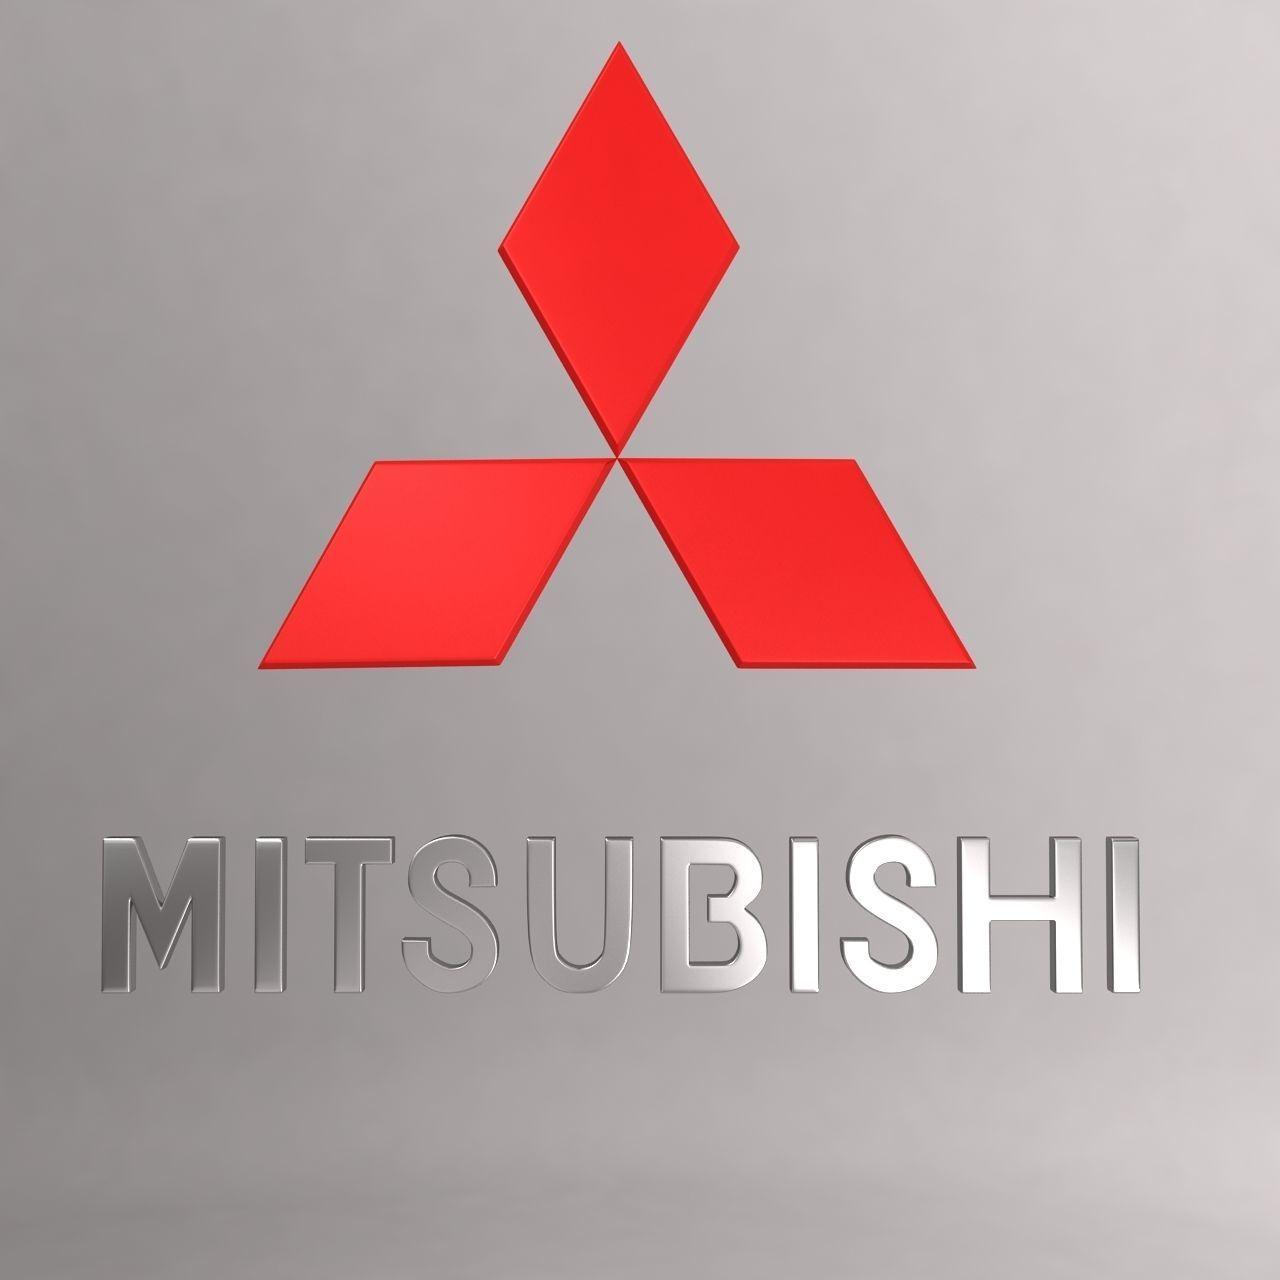 Mitsubishi Car Logo - Mitsubishi car logo keychain 3d model | CGTrader